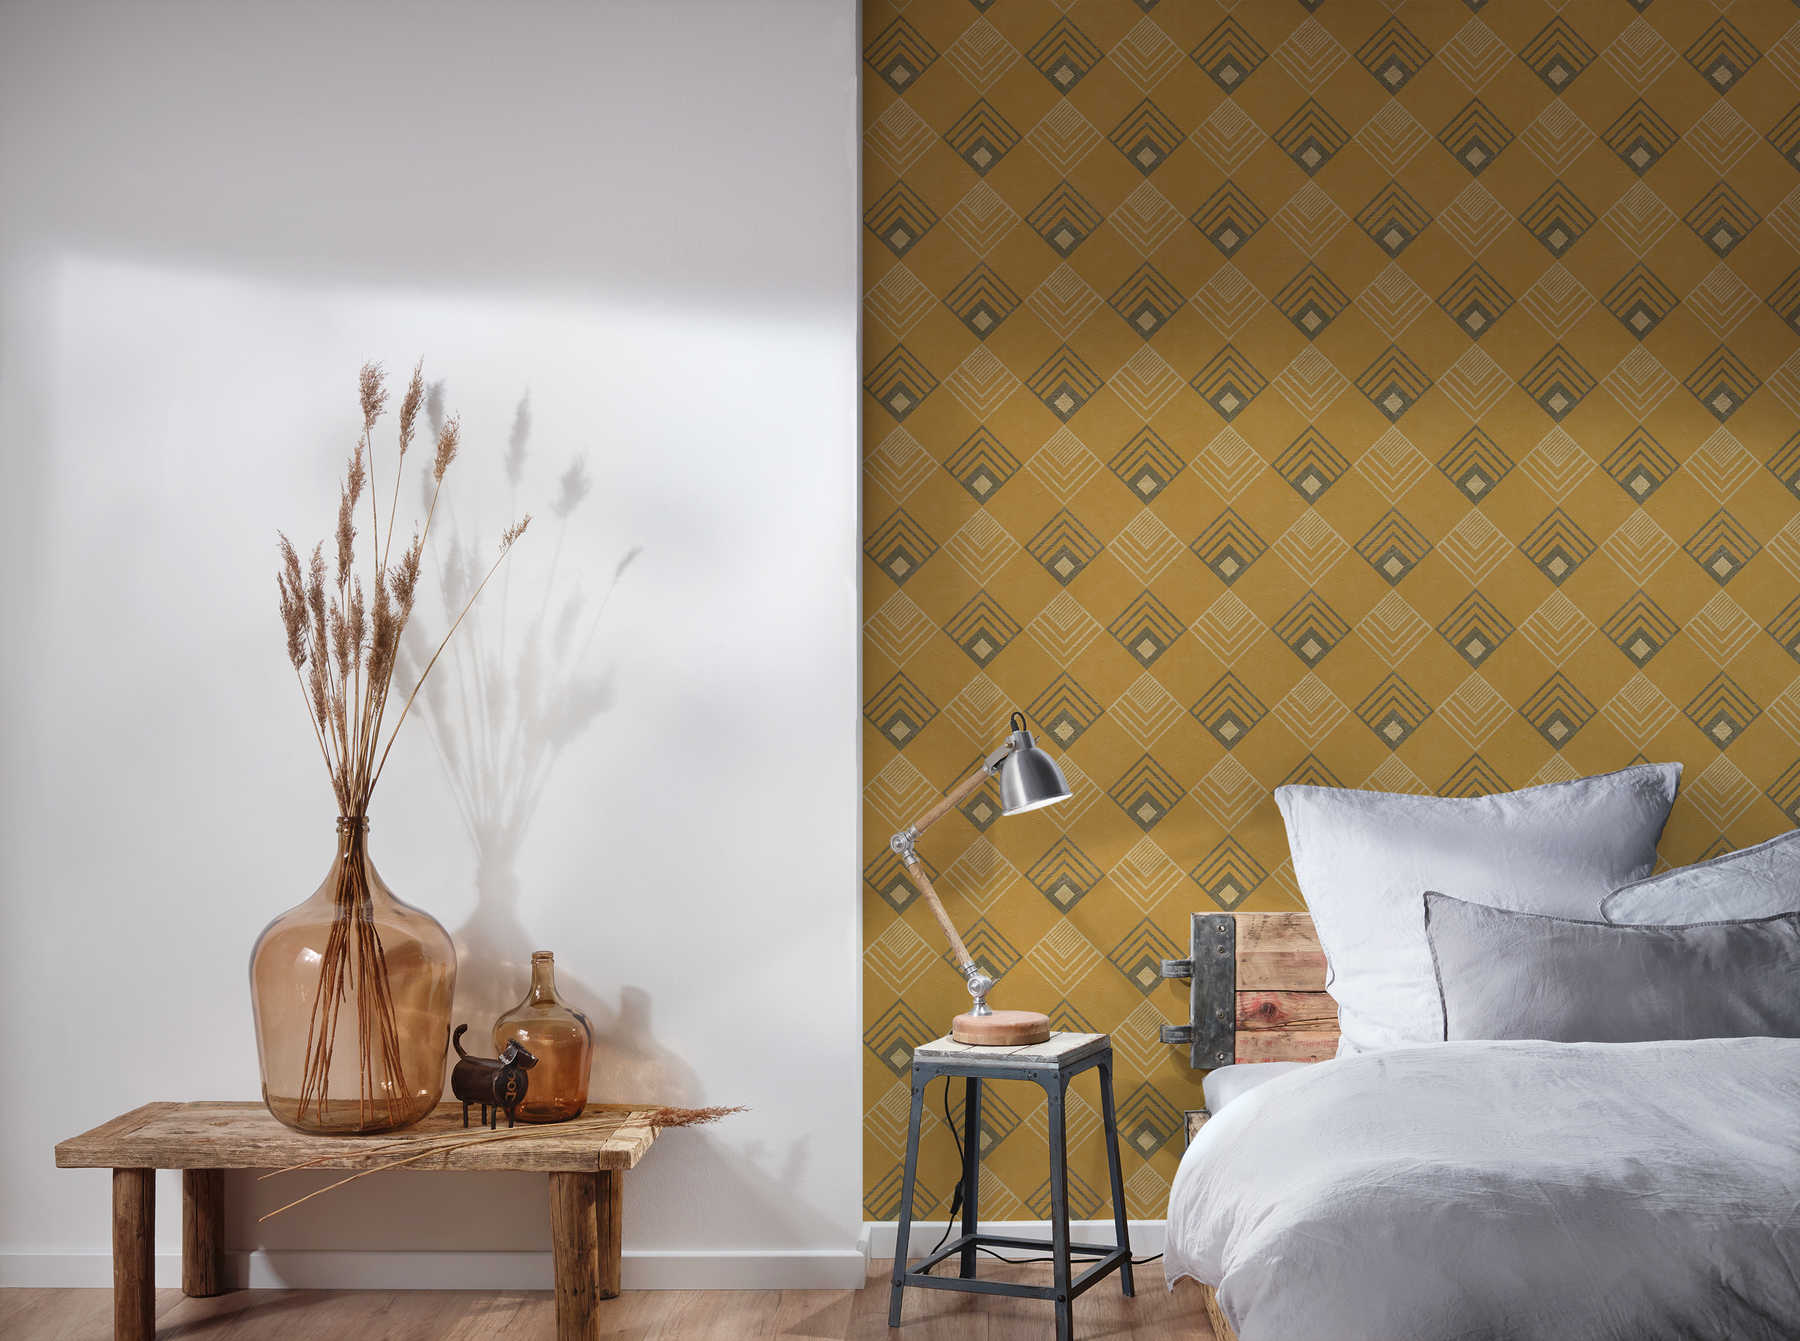             Art deco wallpaper gold, retro design - ocher, yellow, beige
        